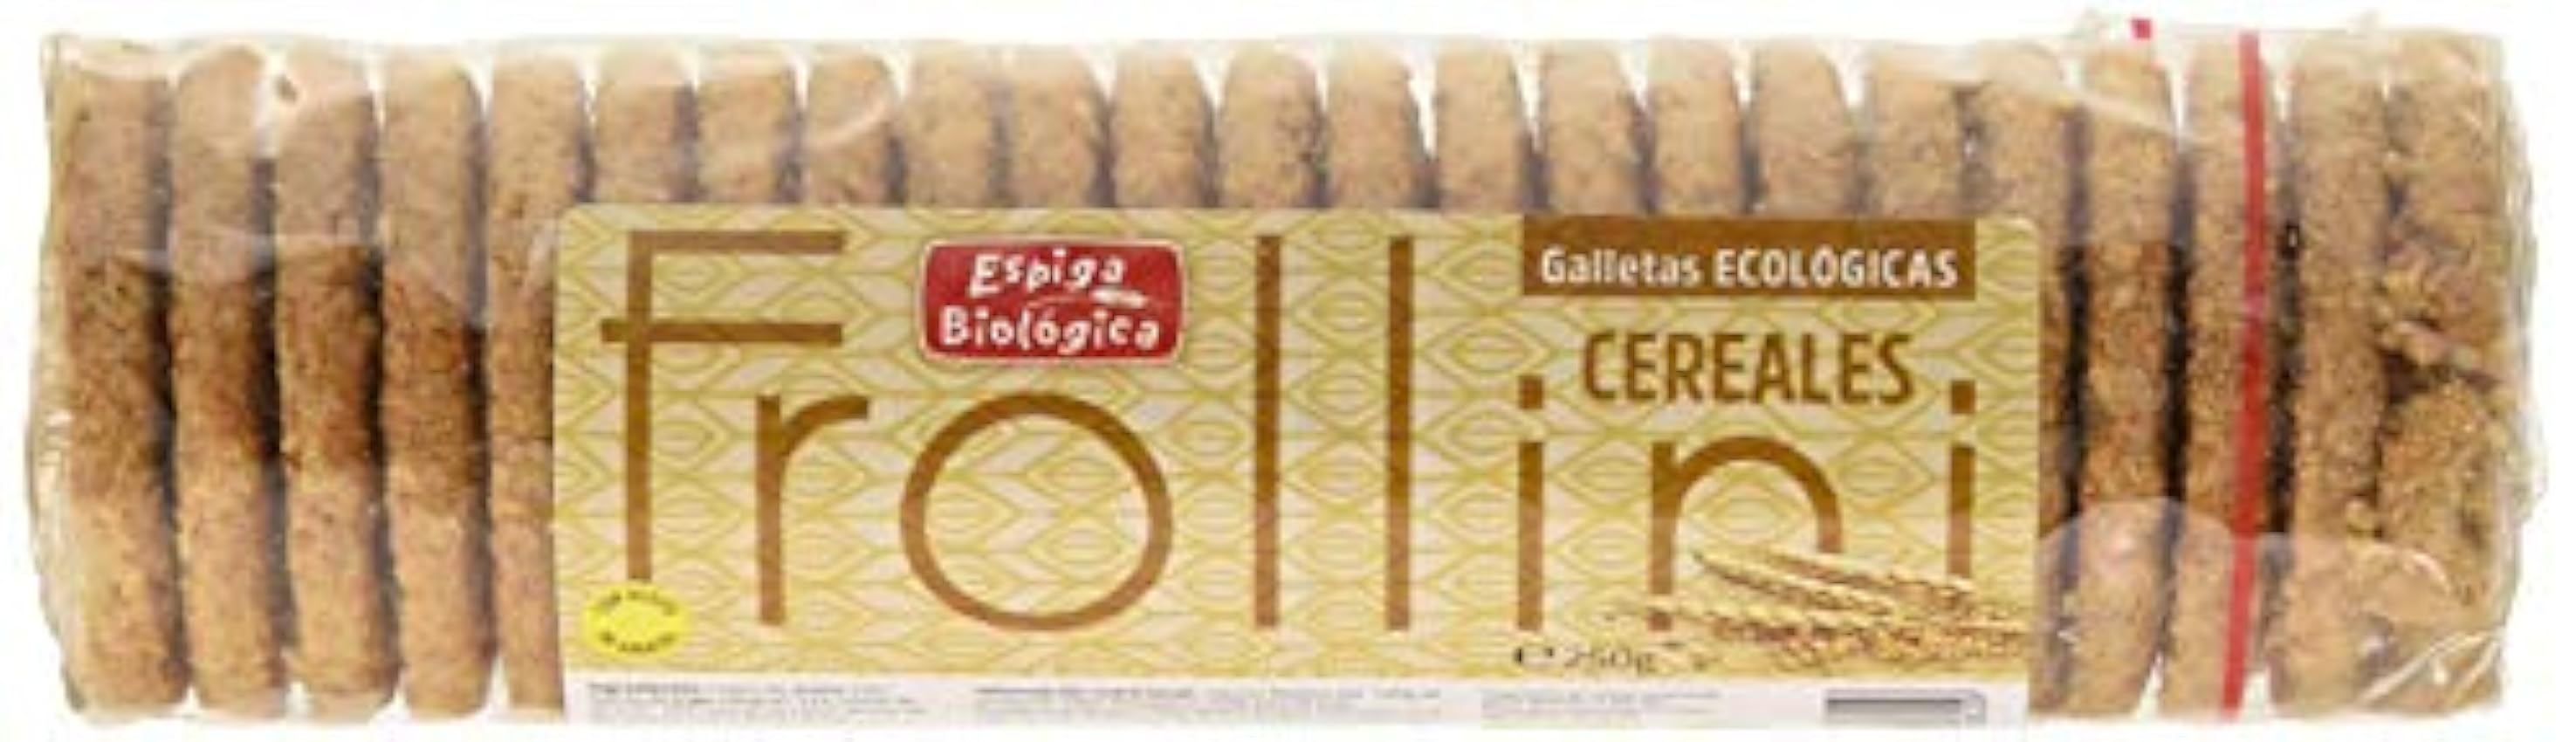 Espiga Bio Frollini (Galletas) Cereales Eco Paq. 250 G 